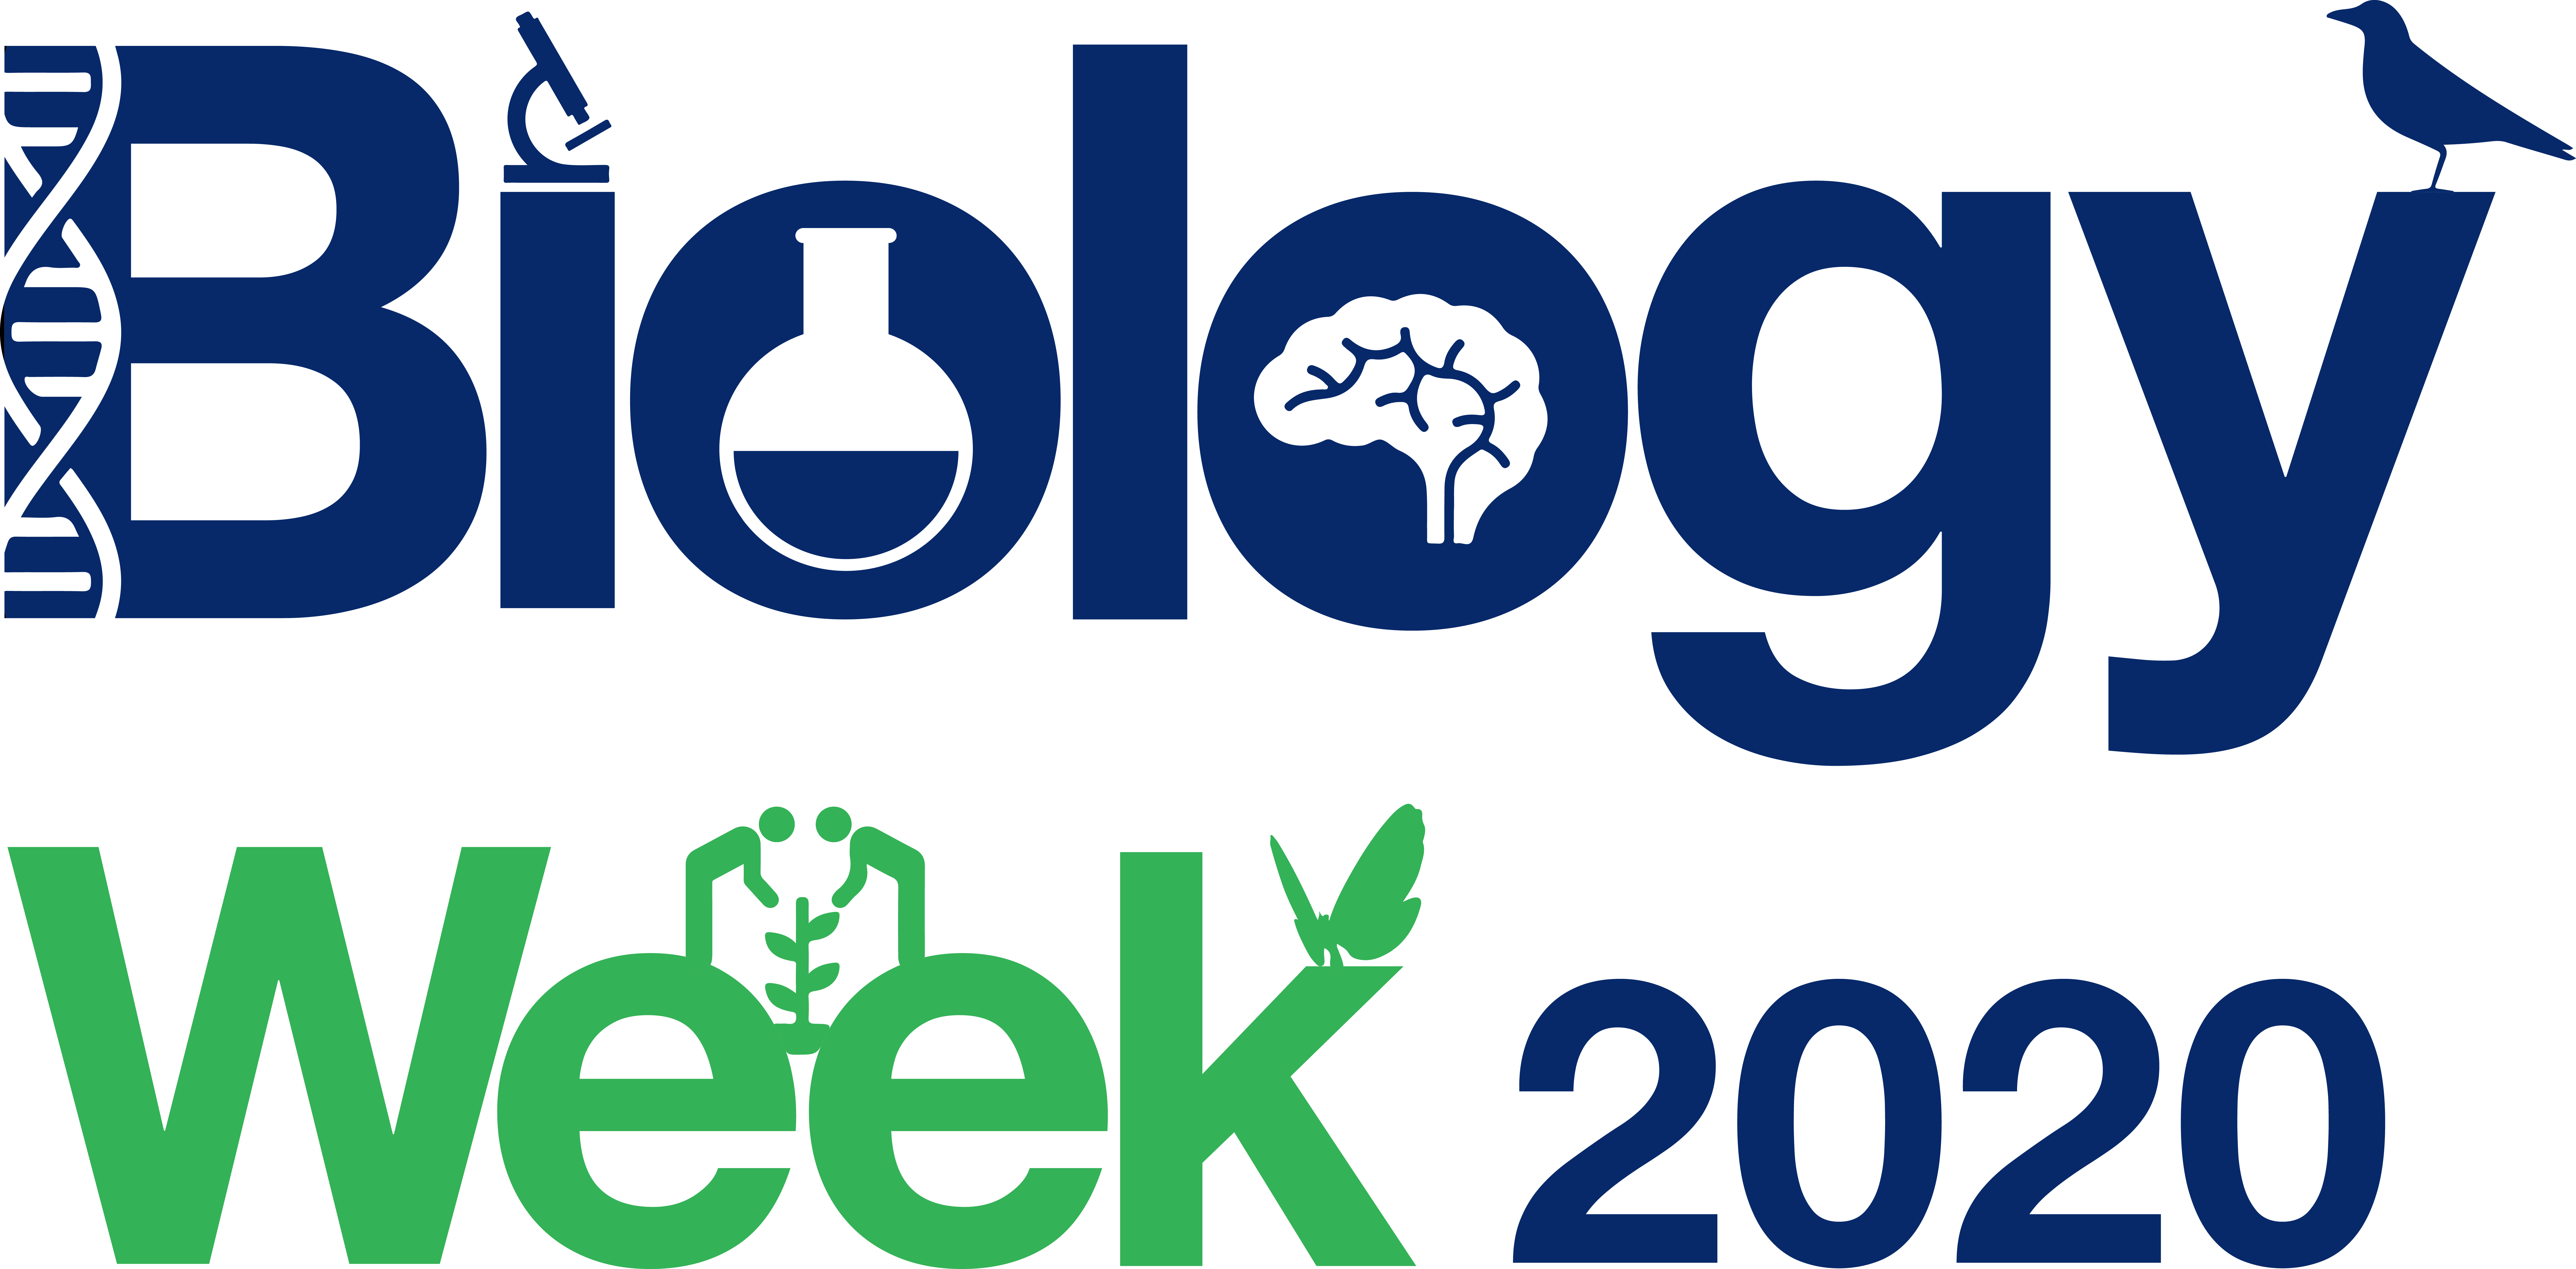 Biology Week 2020 mutlcoloured